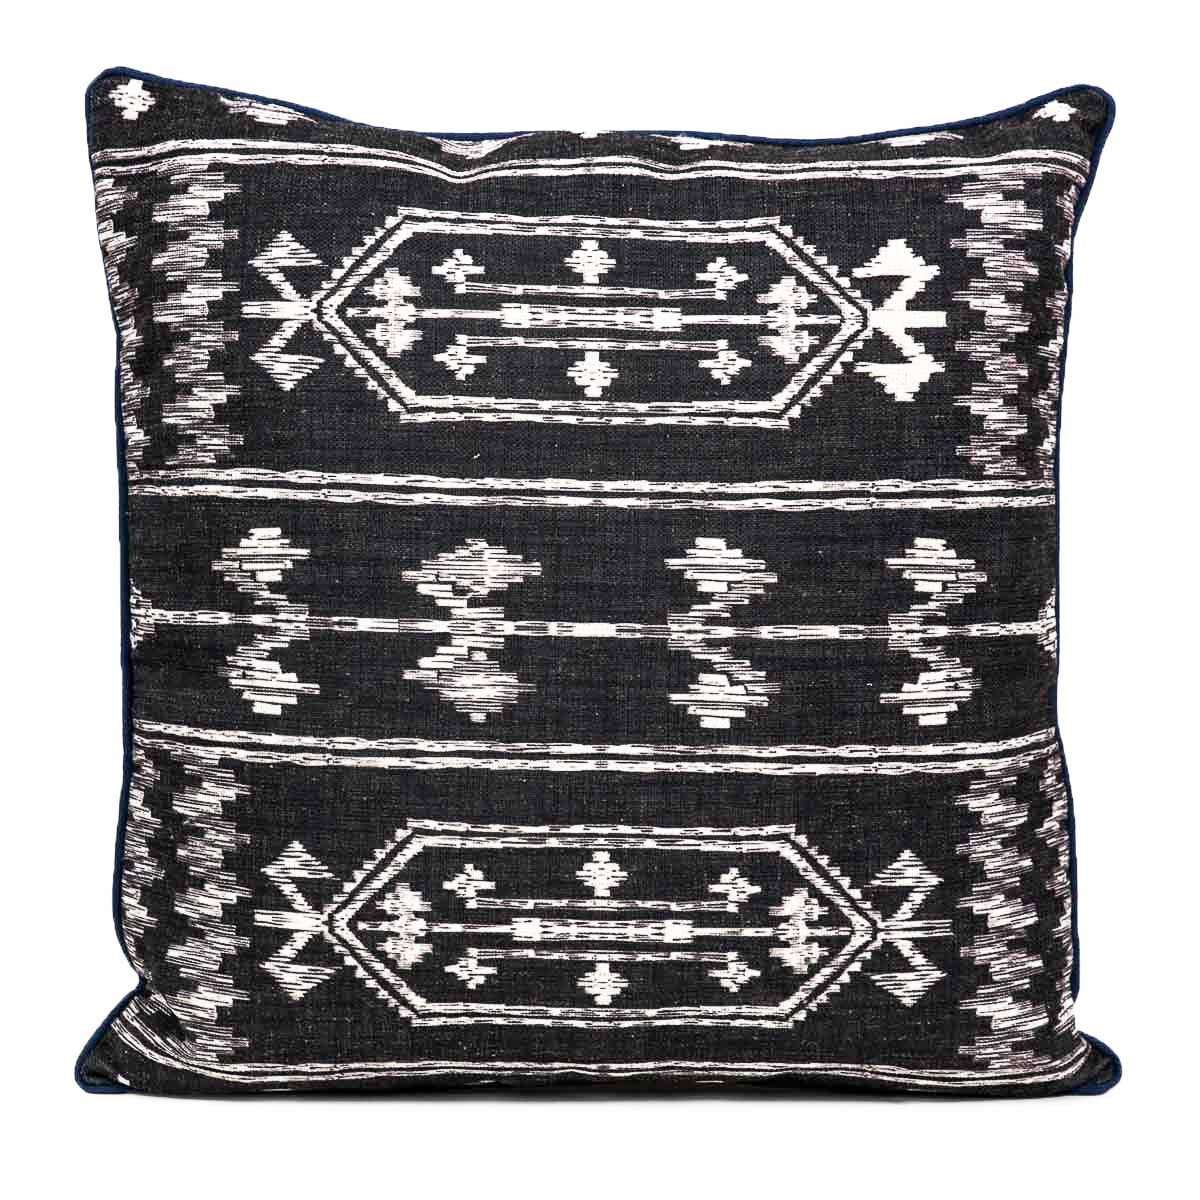 12 x 20 Rectangular Soft Cotton Dhurrie Accent Lumbar Throw Pillow, Kilim  Pattern, Set of 2,, 1 unit - Kroger